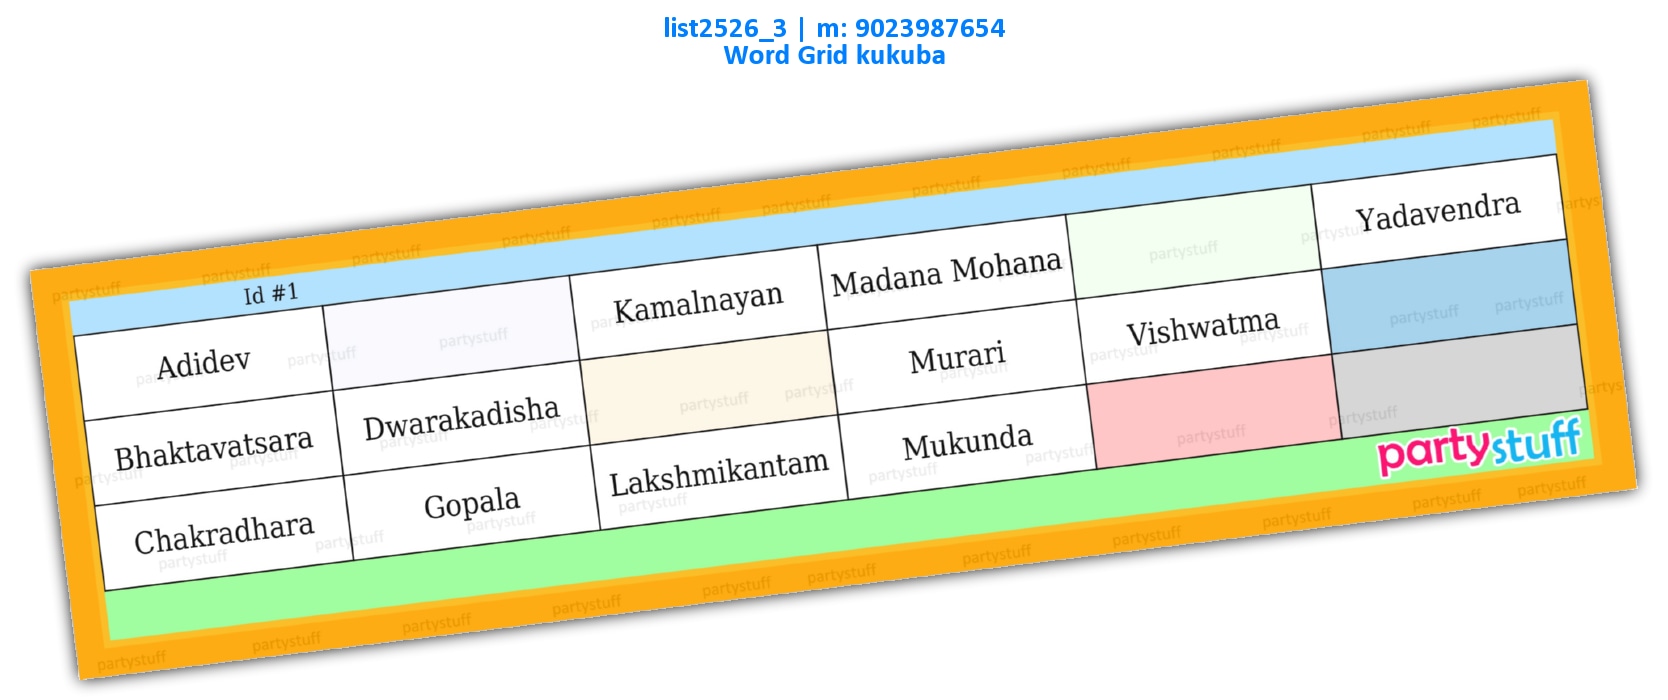 Krishna Names 1 | Image list2526_3 Image Tambola Housie